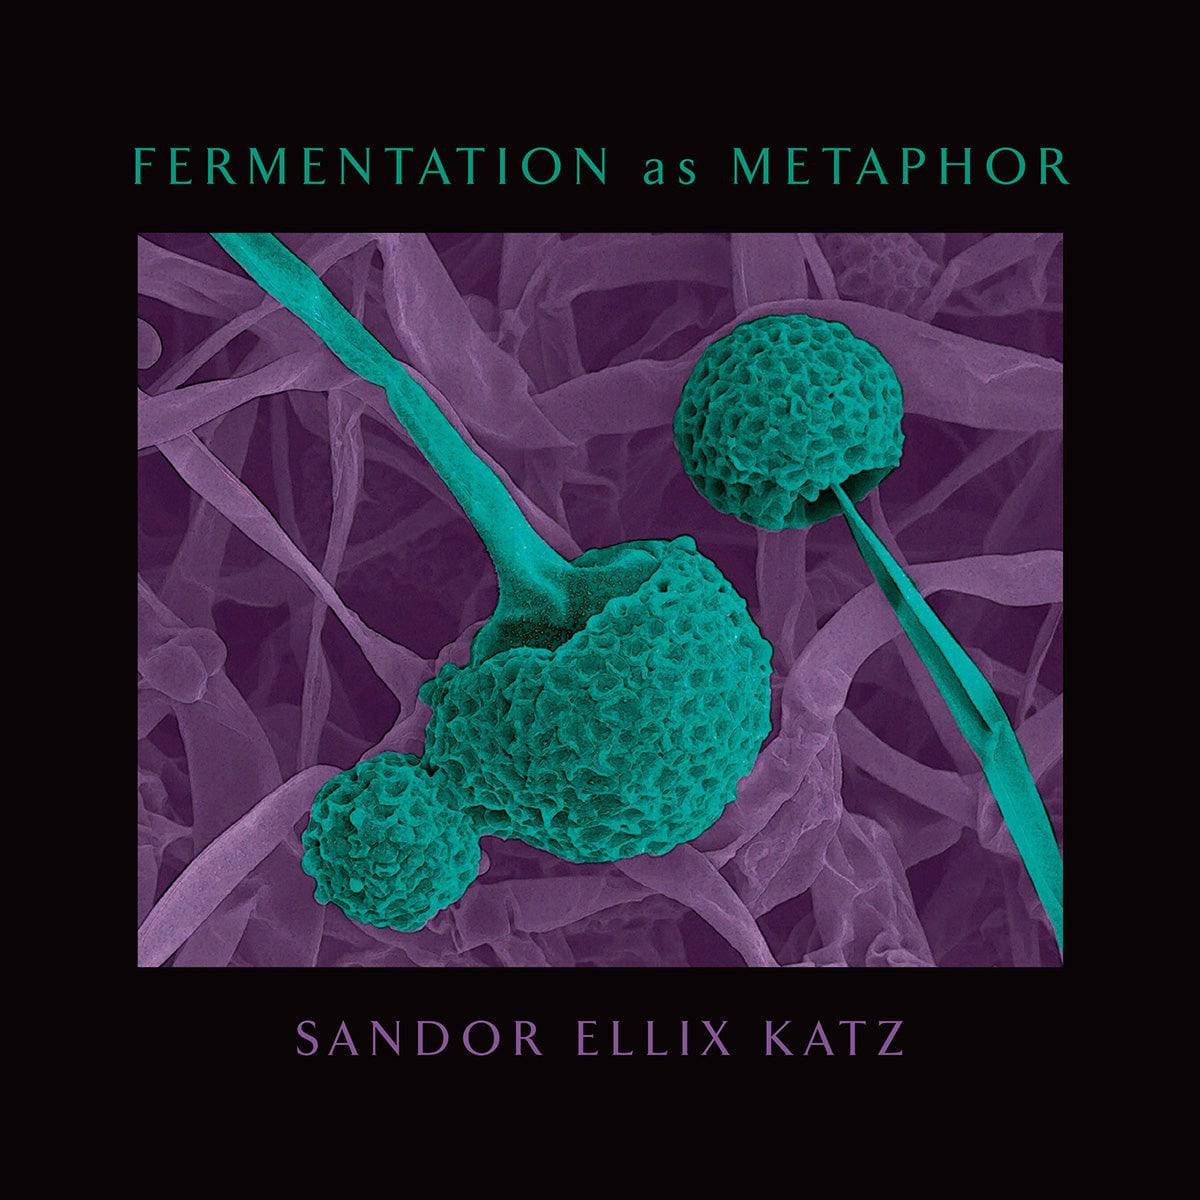 Fermentation as Metaphor by Sandor Ellix Katz - The Josephine Porter Institute